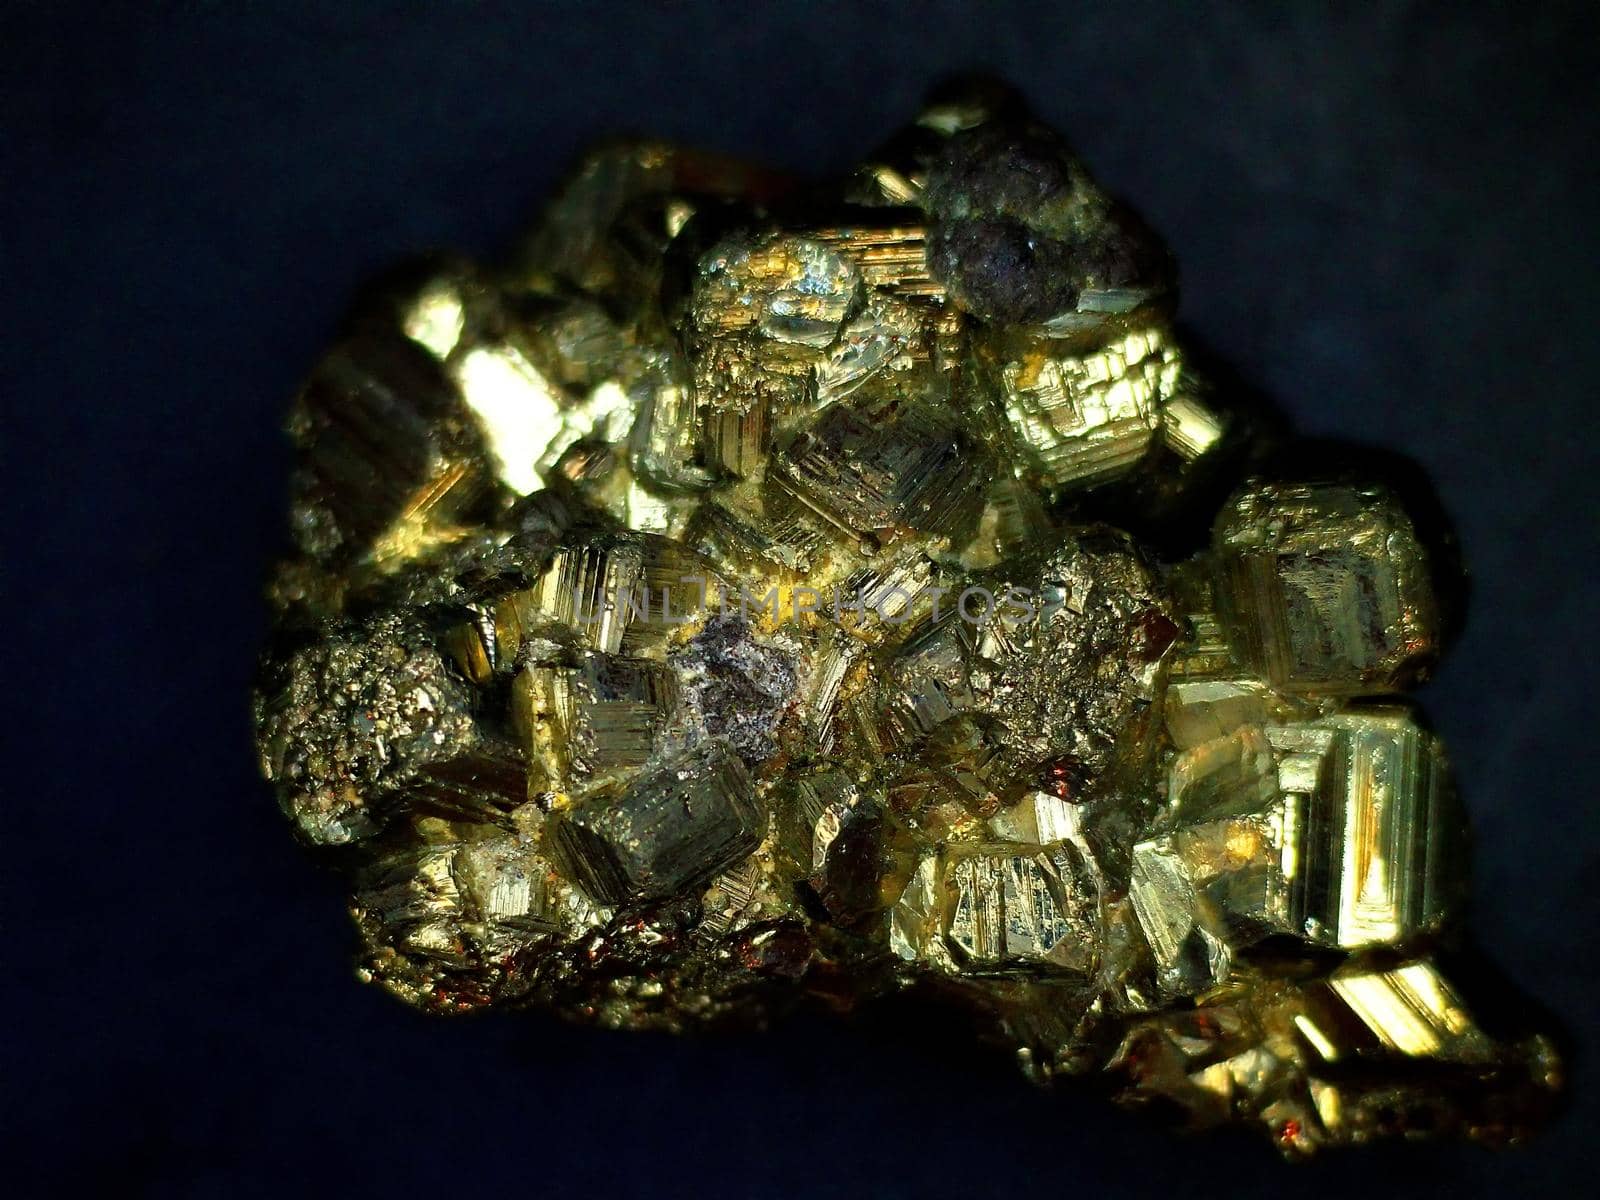 Pyrite, mineral under a microscope by Jochen